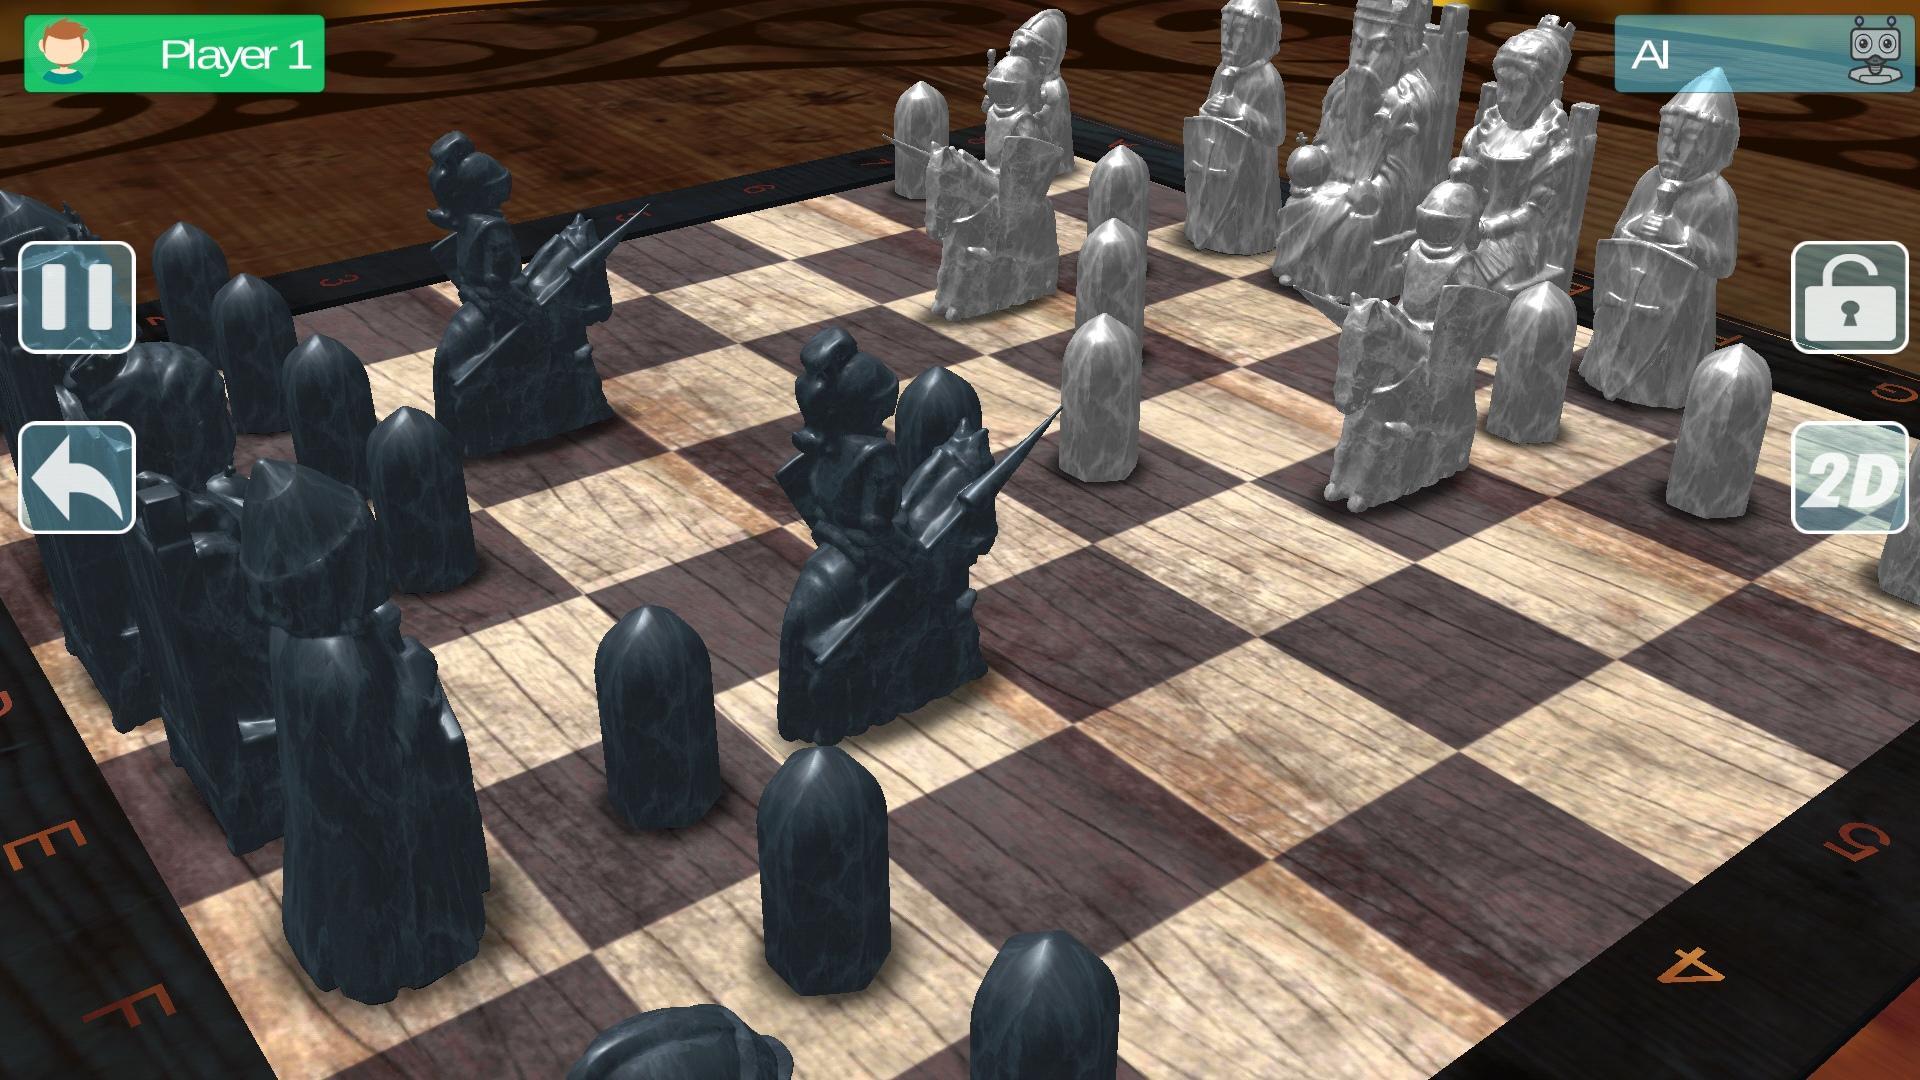 Игра мастер 3 д. CHESSMASTER 3d. CHESSMASTER 9000 игра на ПК. Mephisto Chess Master 3d Pro. Андроид игра войны как шахматы.